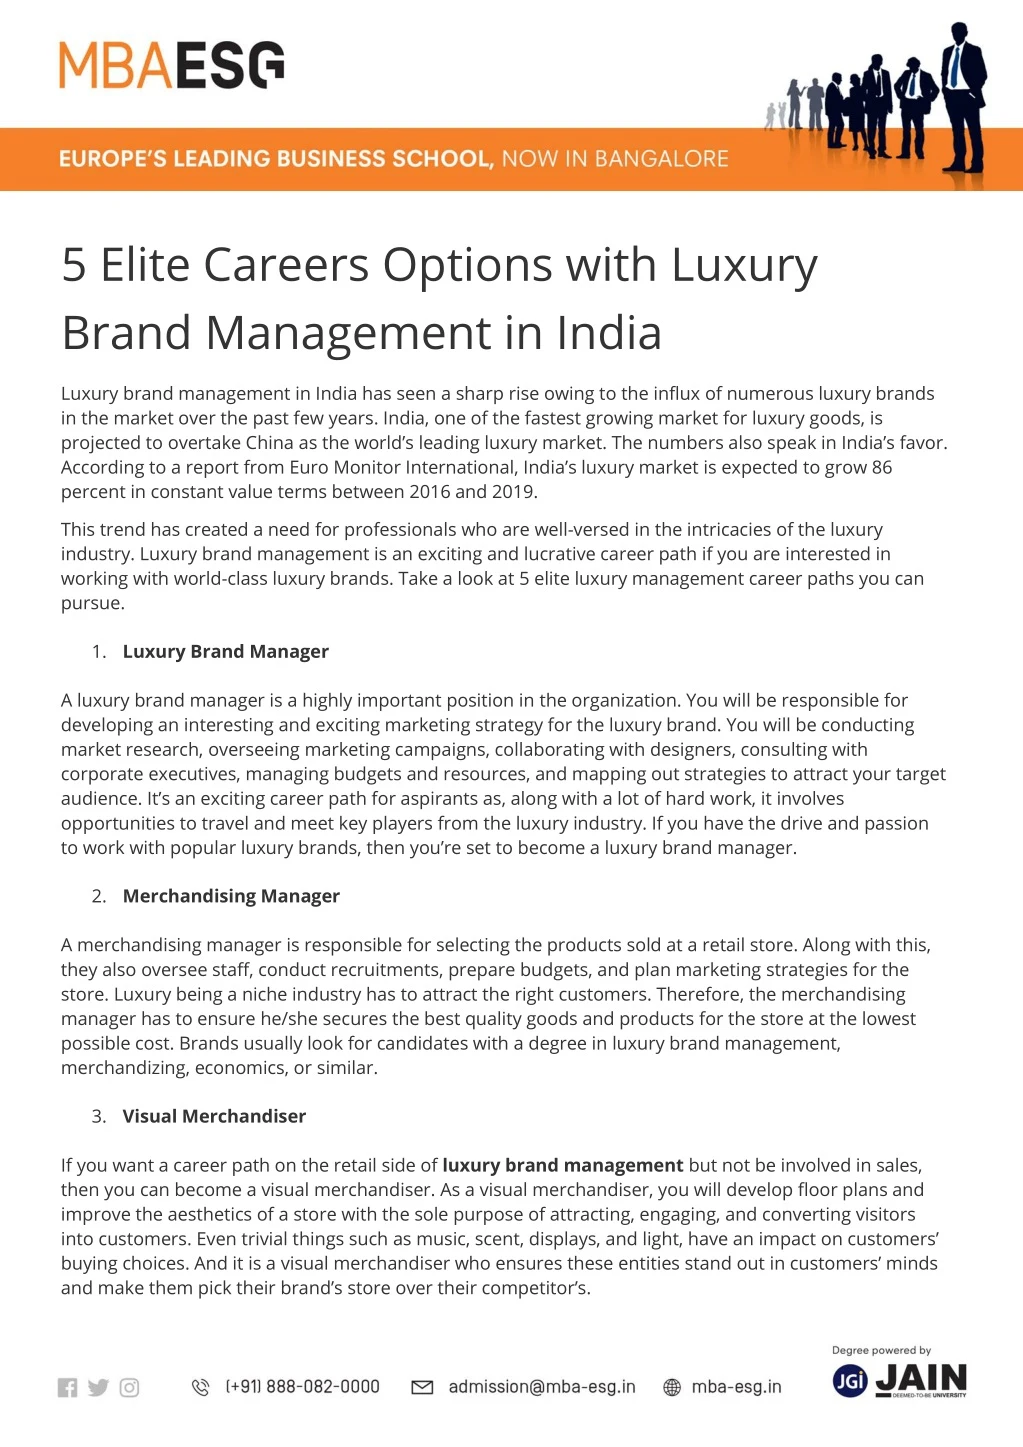 5 elite careers options with luxury brand